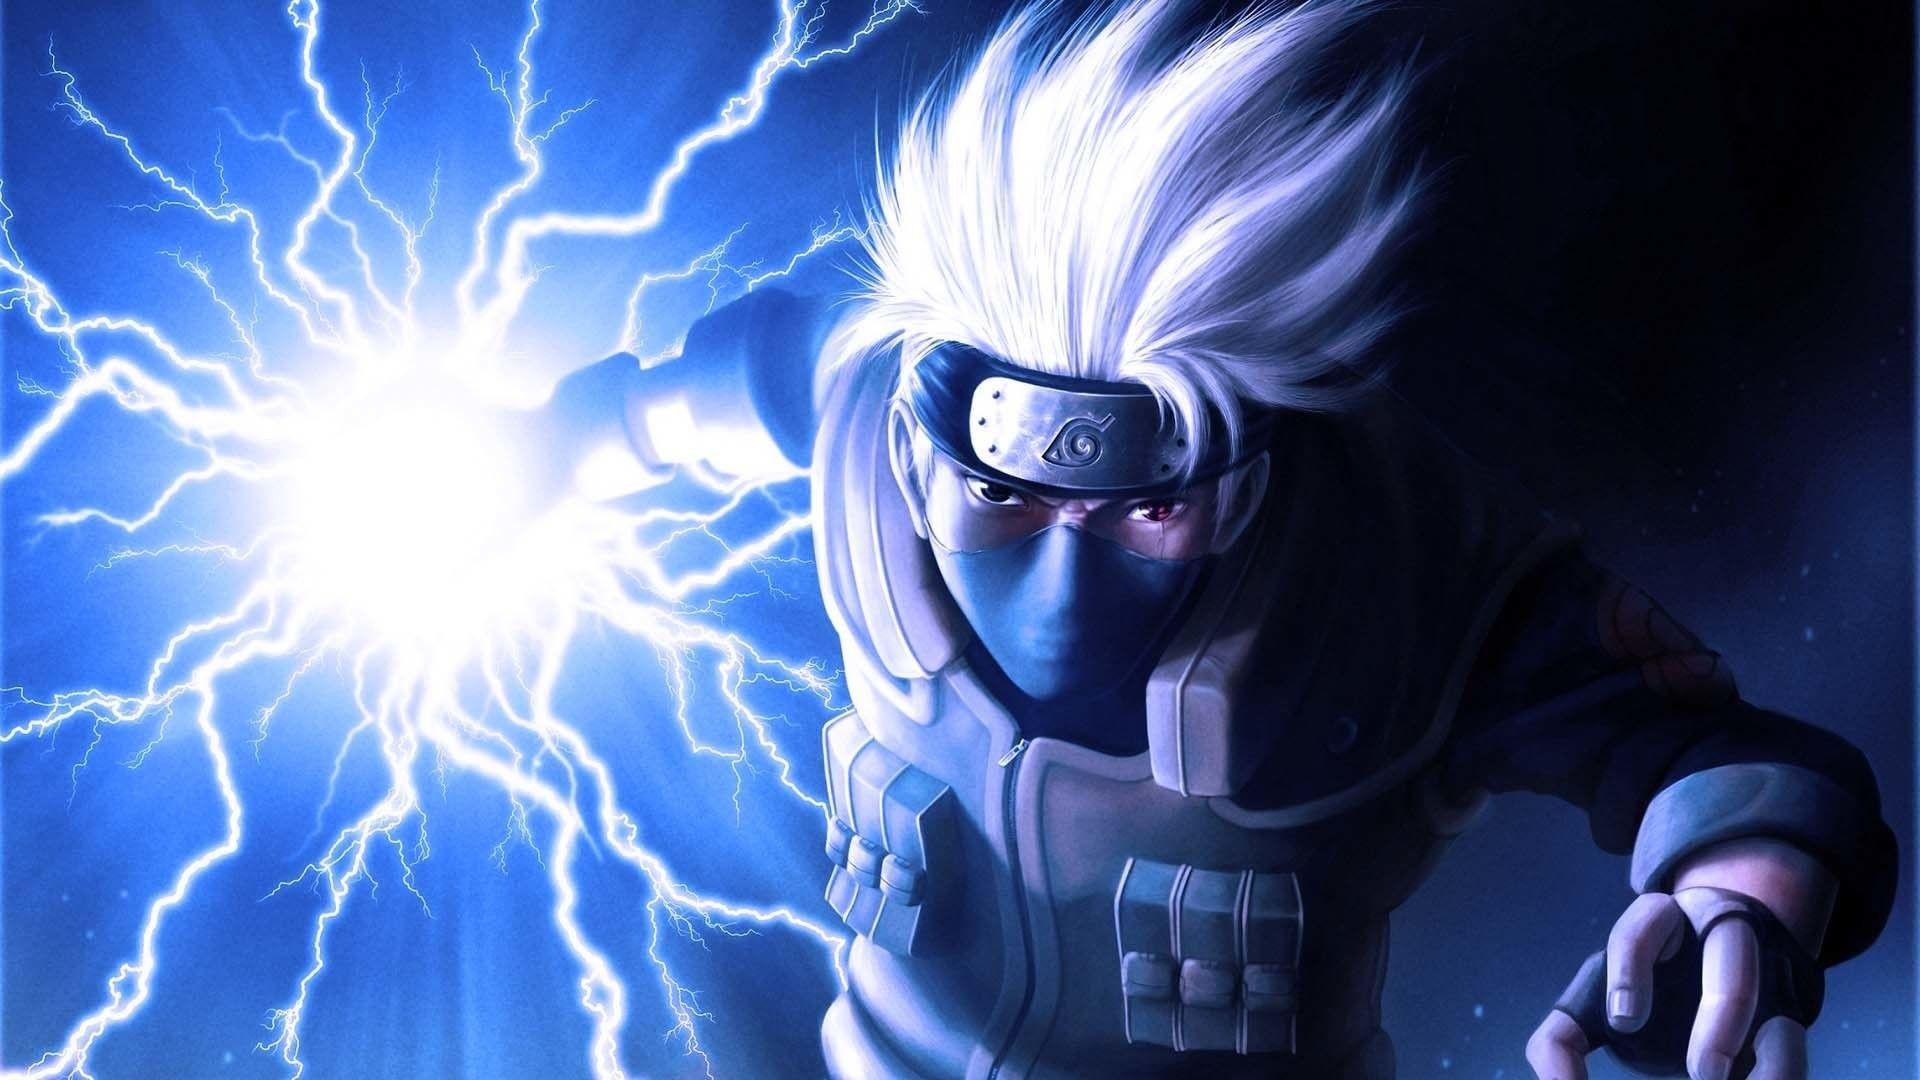 Naruto Kakashi Wallpaper background picture